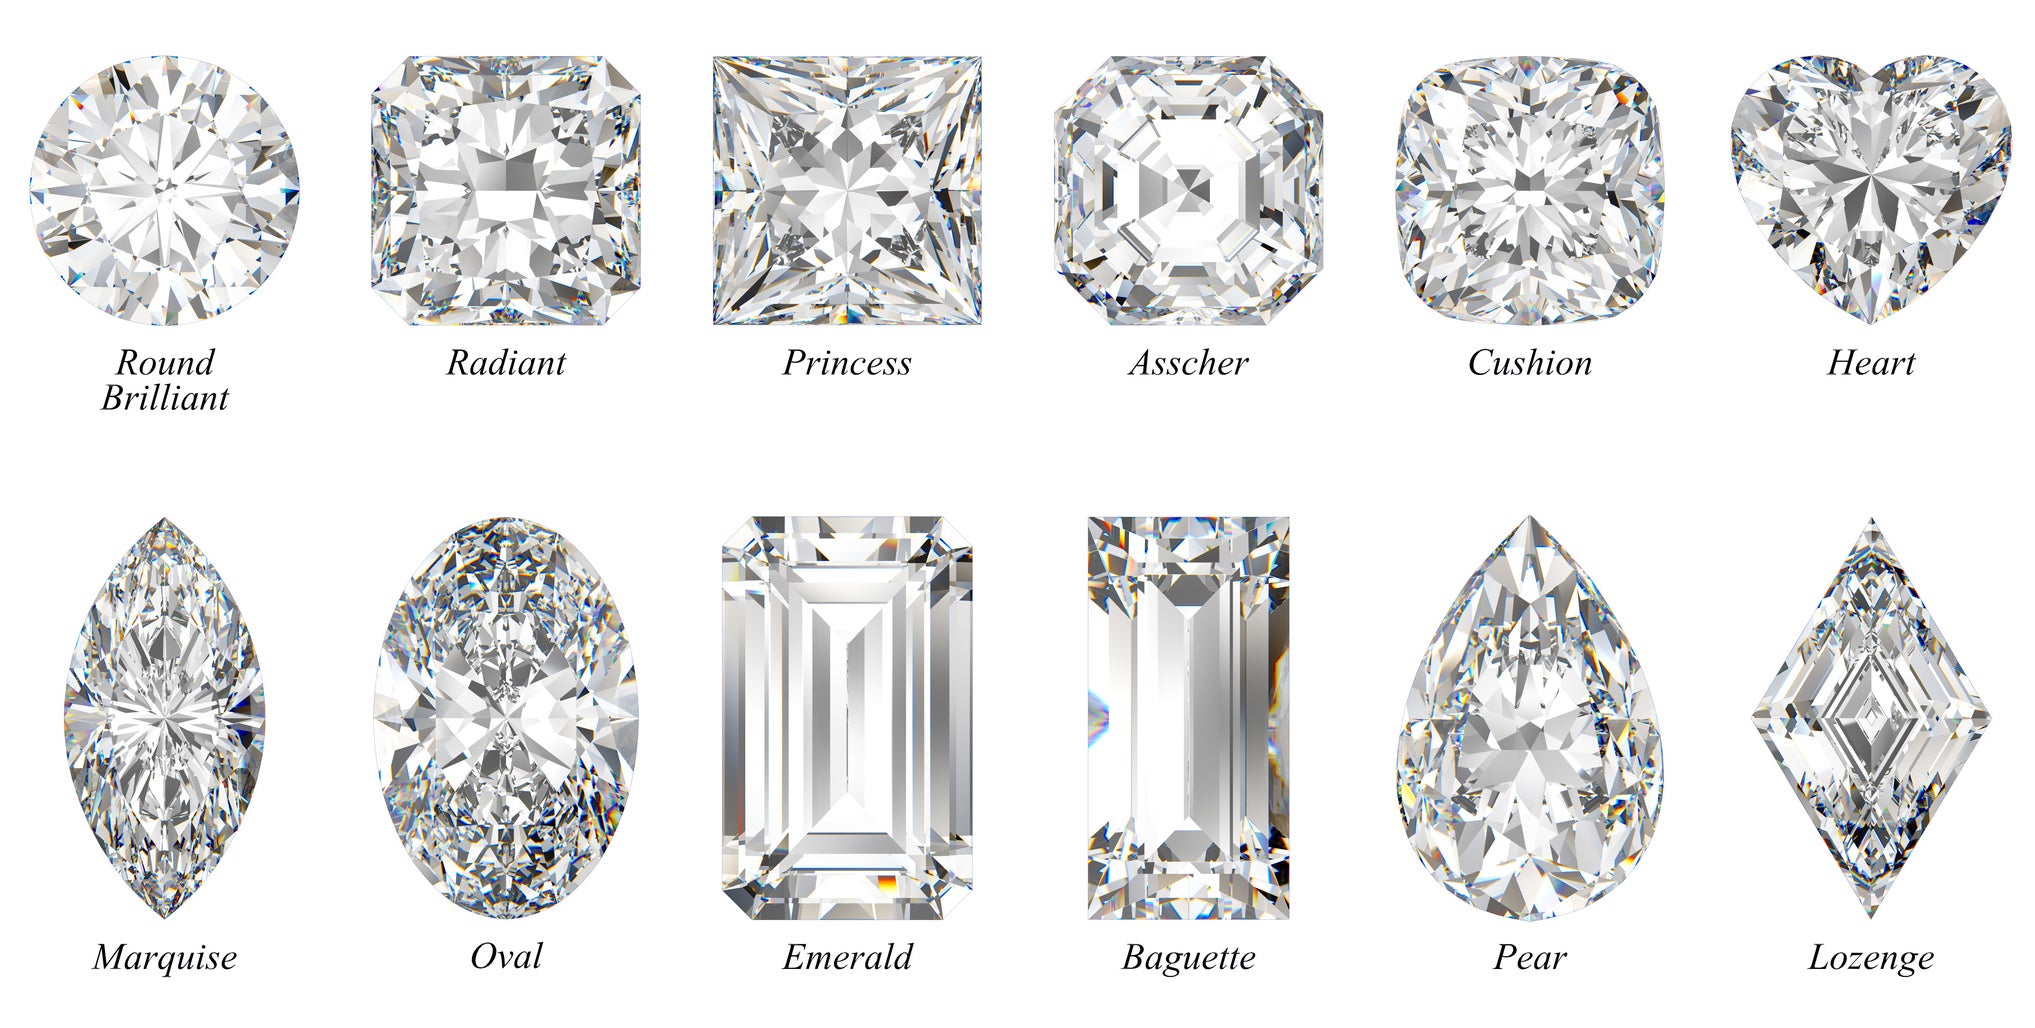 4Cs of Diamonds - Different Types of Diamond Cuts 